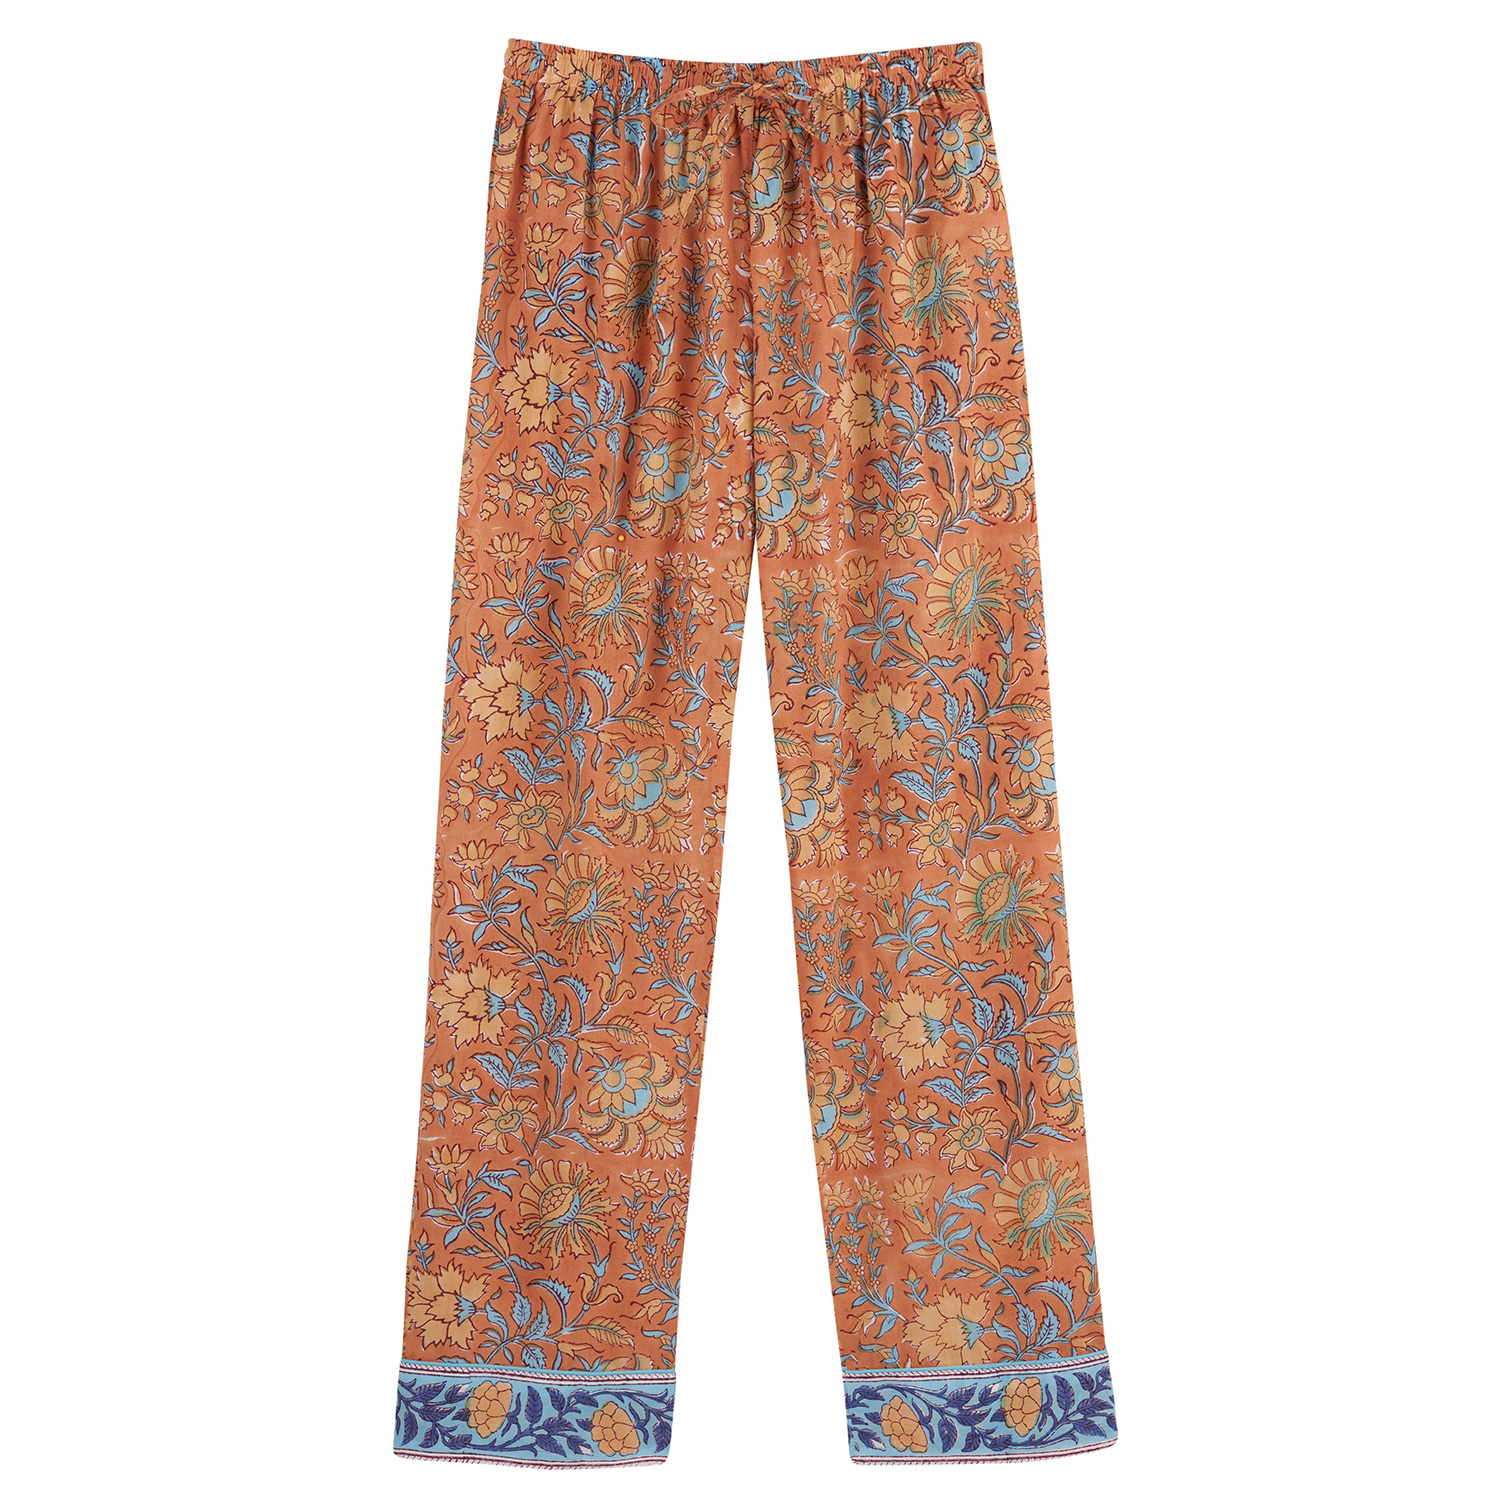 Zara Floral Print Cotton Pajamas | Signals